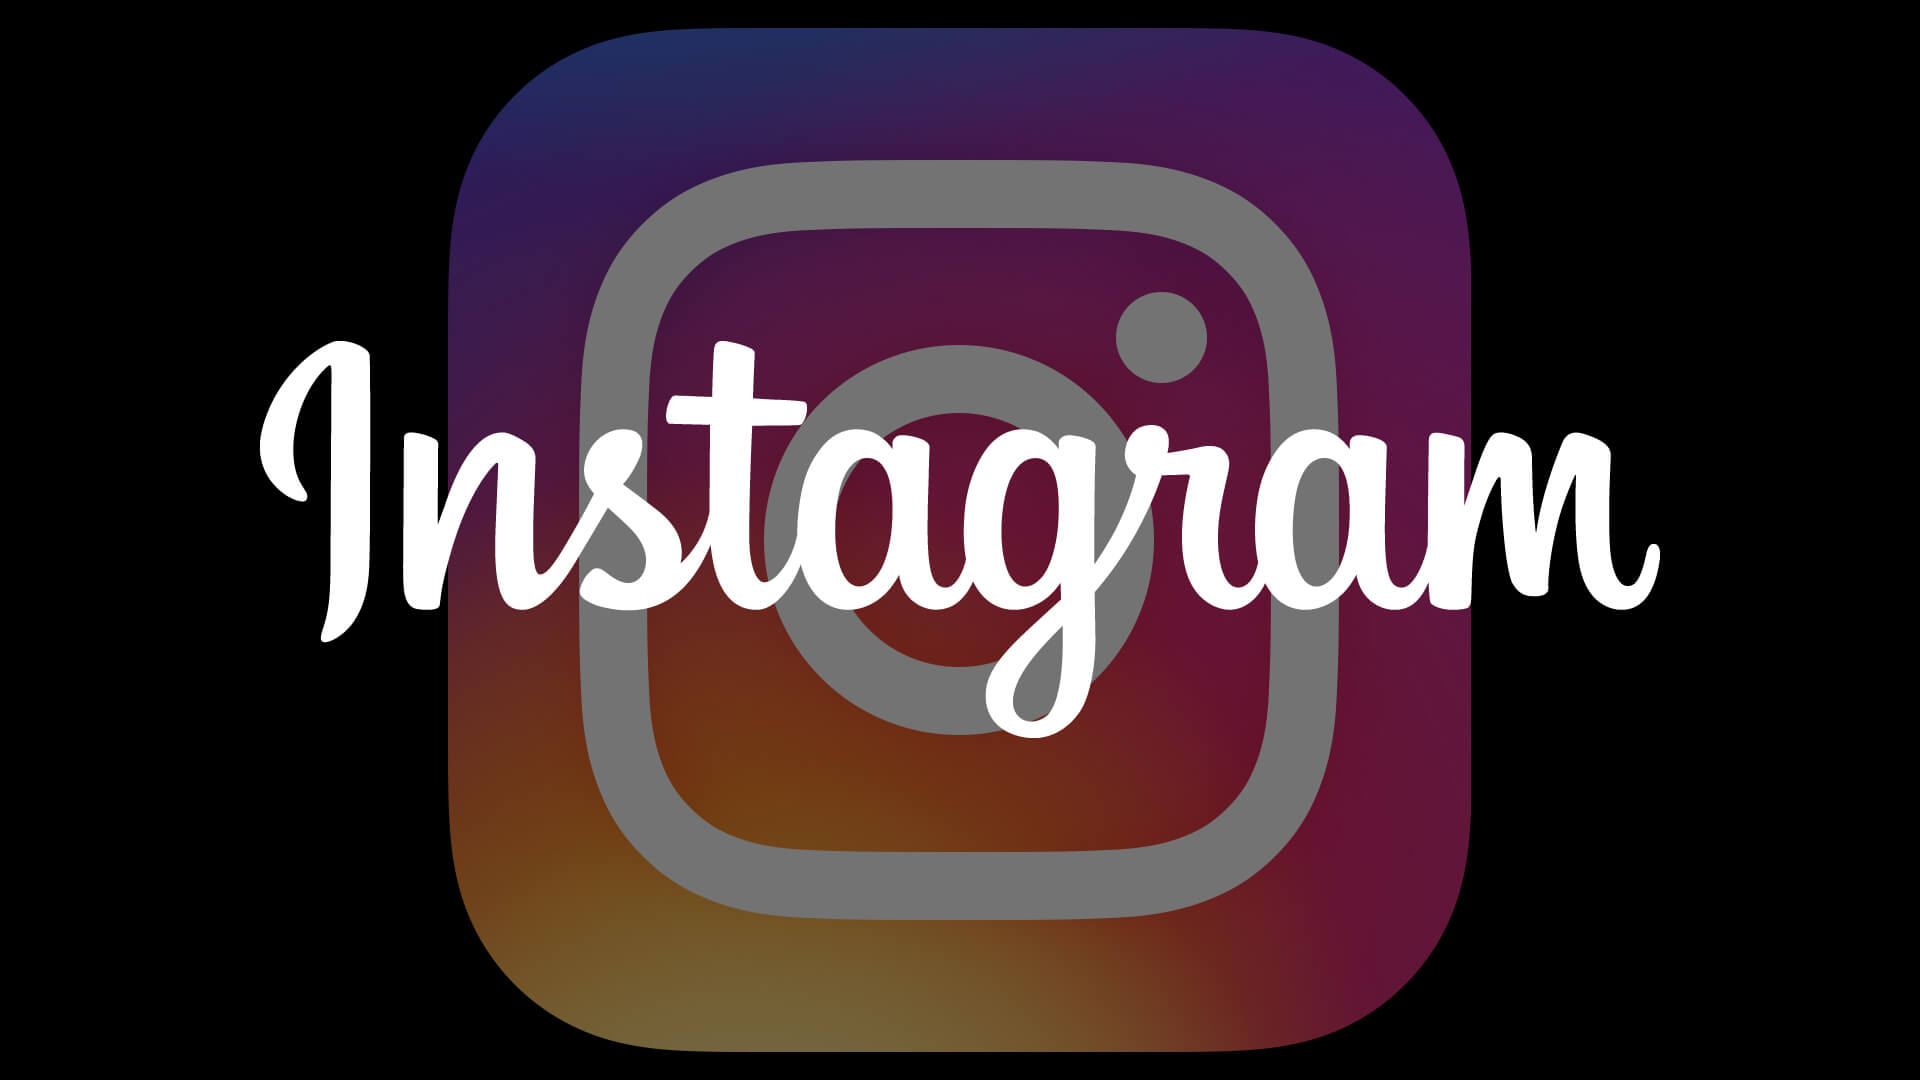 instagram hack - 6 ways to hack someone s instagram without their password